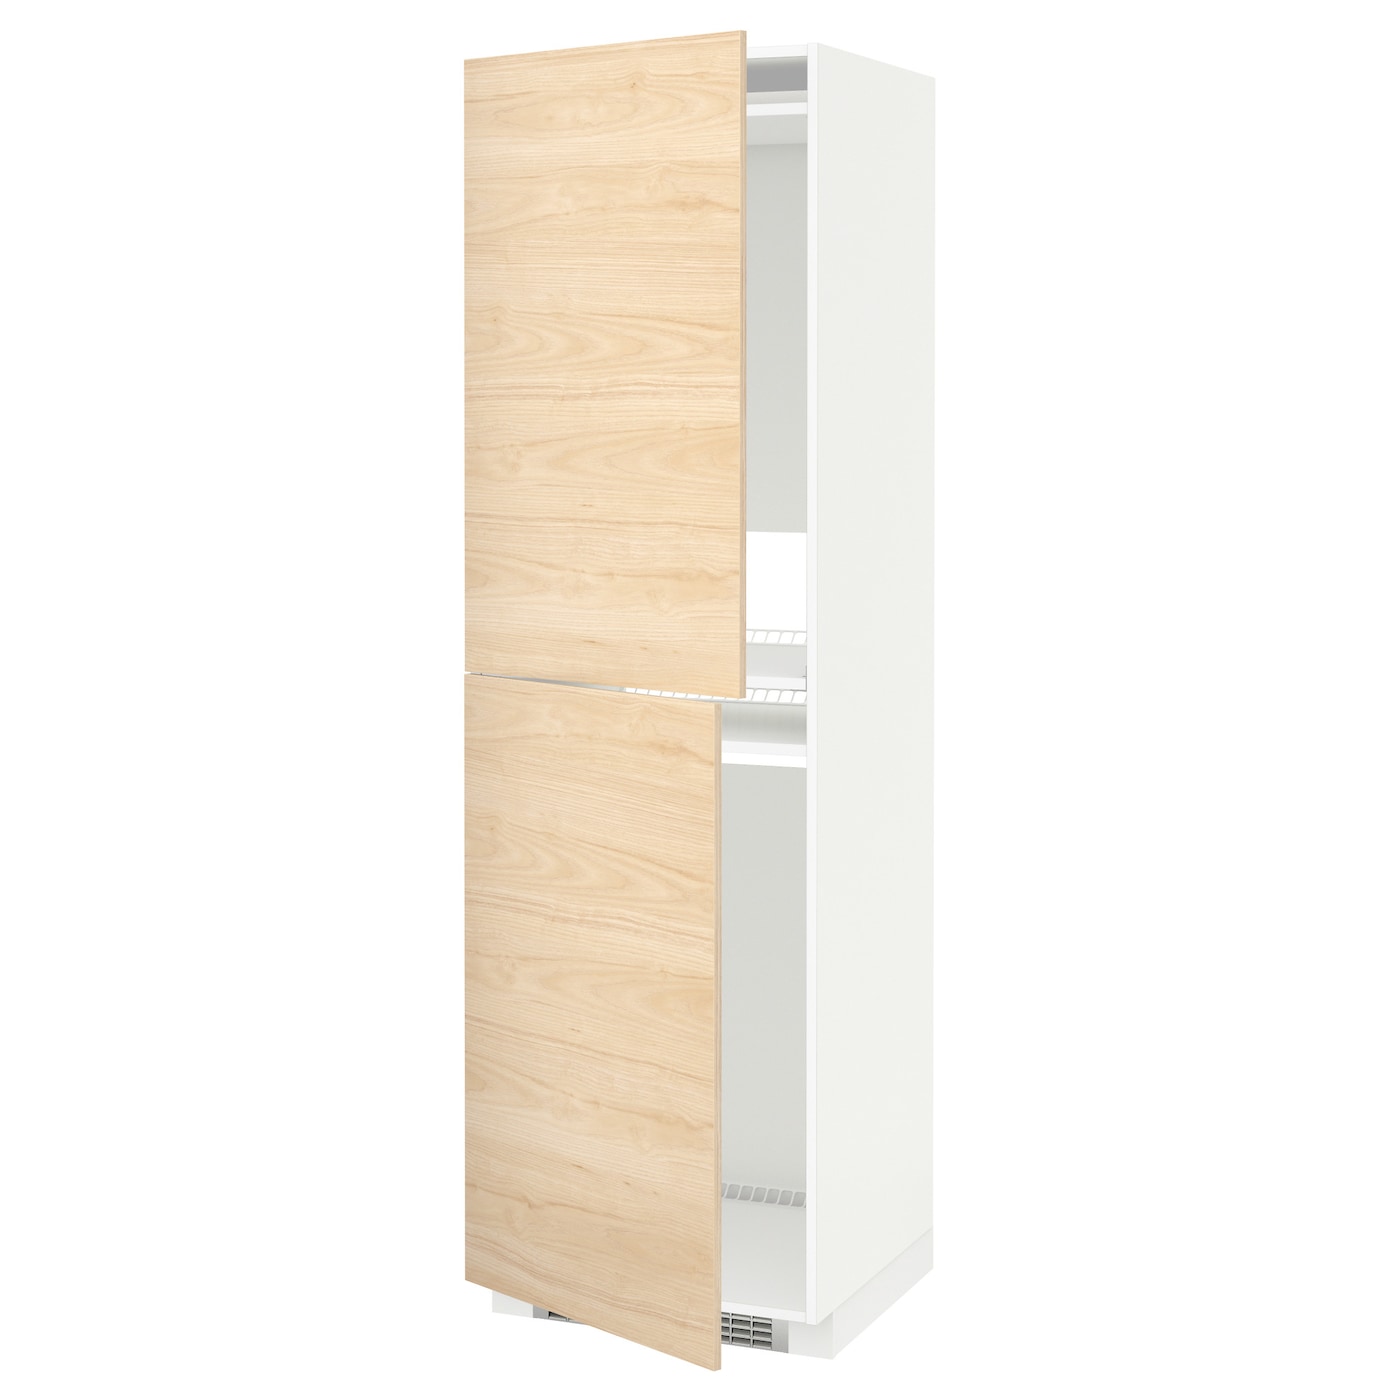 Высокий кухонный шкаф - IKEA METOD/МЕТОД ИКЕА, 200х60х60 см, белый/серо-зеленый